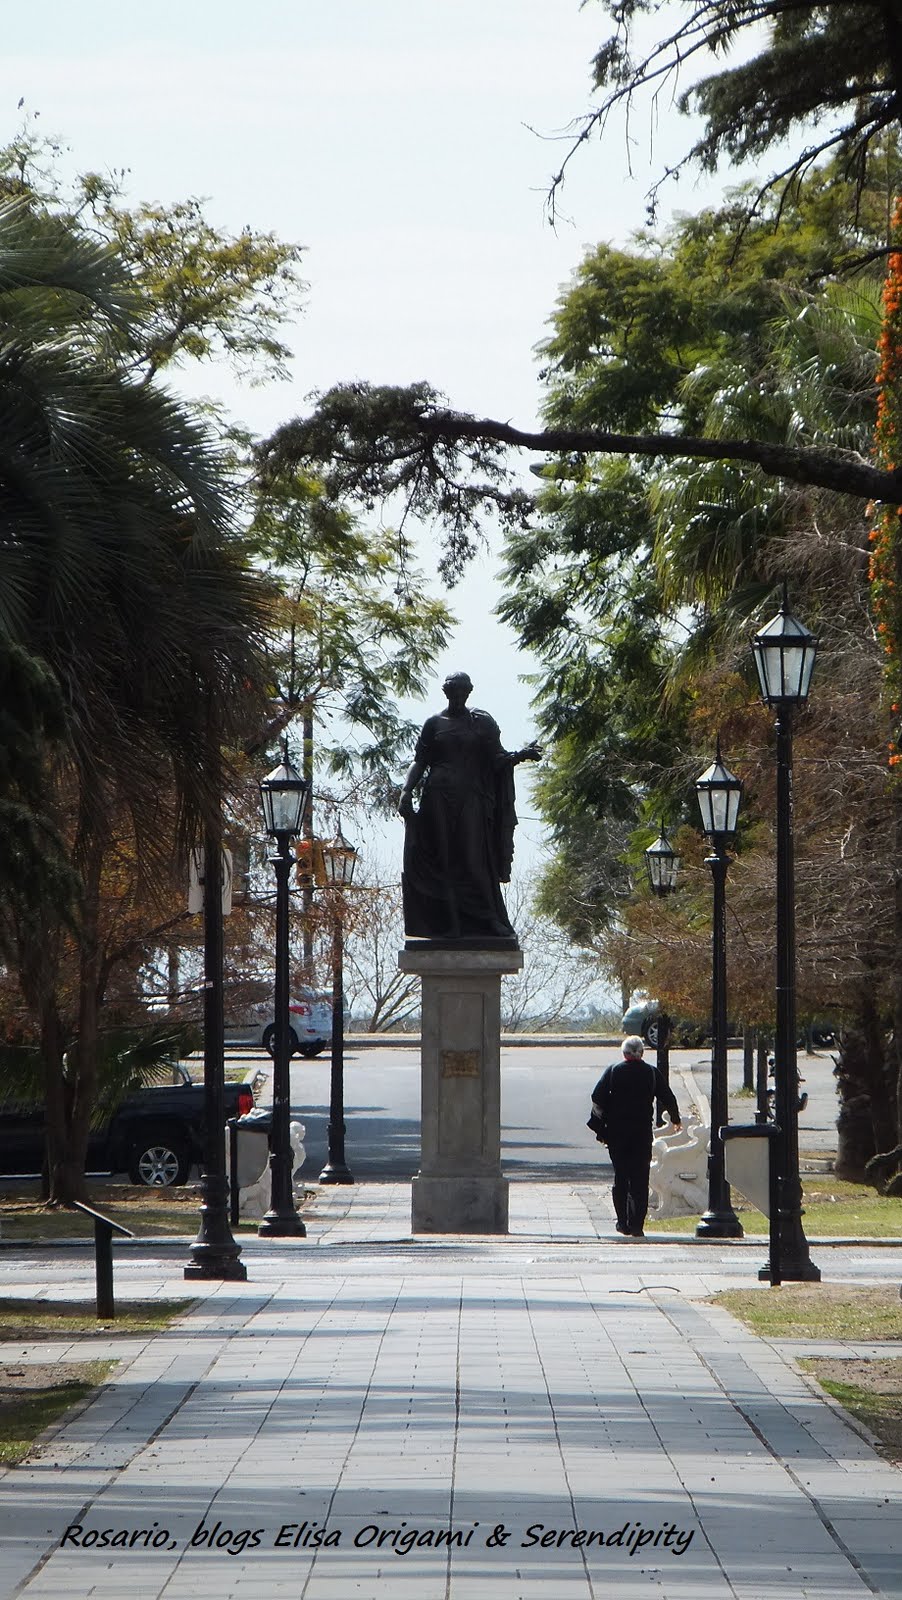 Boulevard Oroño, Rosario, Argentina, Elisa N, Blog de Viajes, Lifestyle, Travel